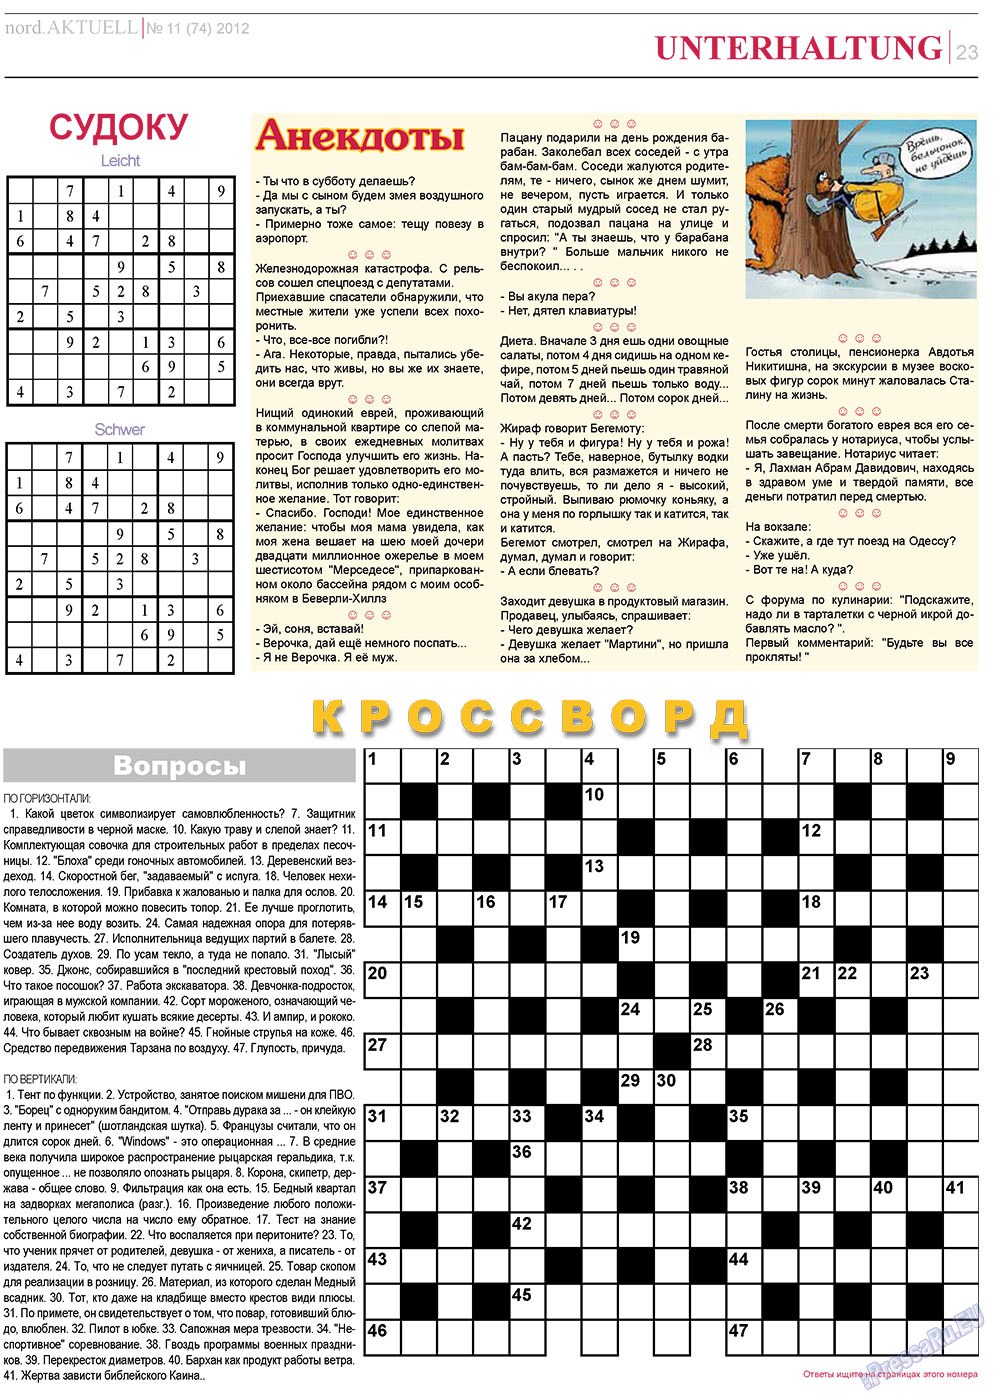 nord.Aktuell, газета. 2012 №11 стр.23